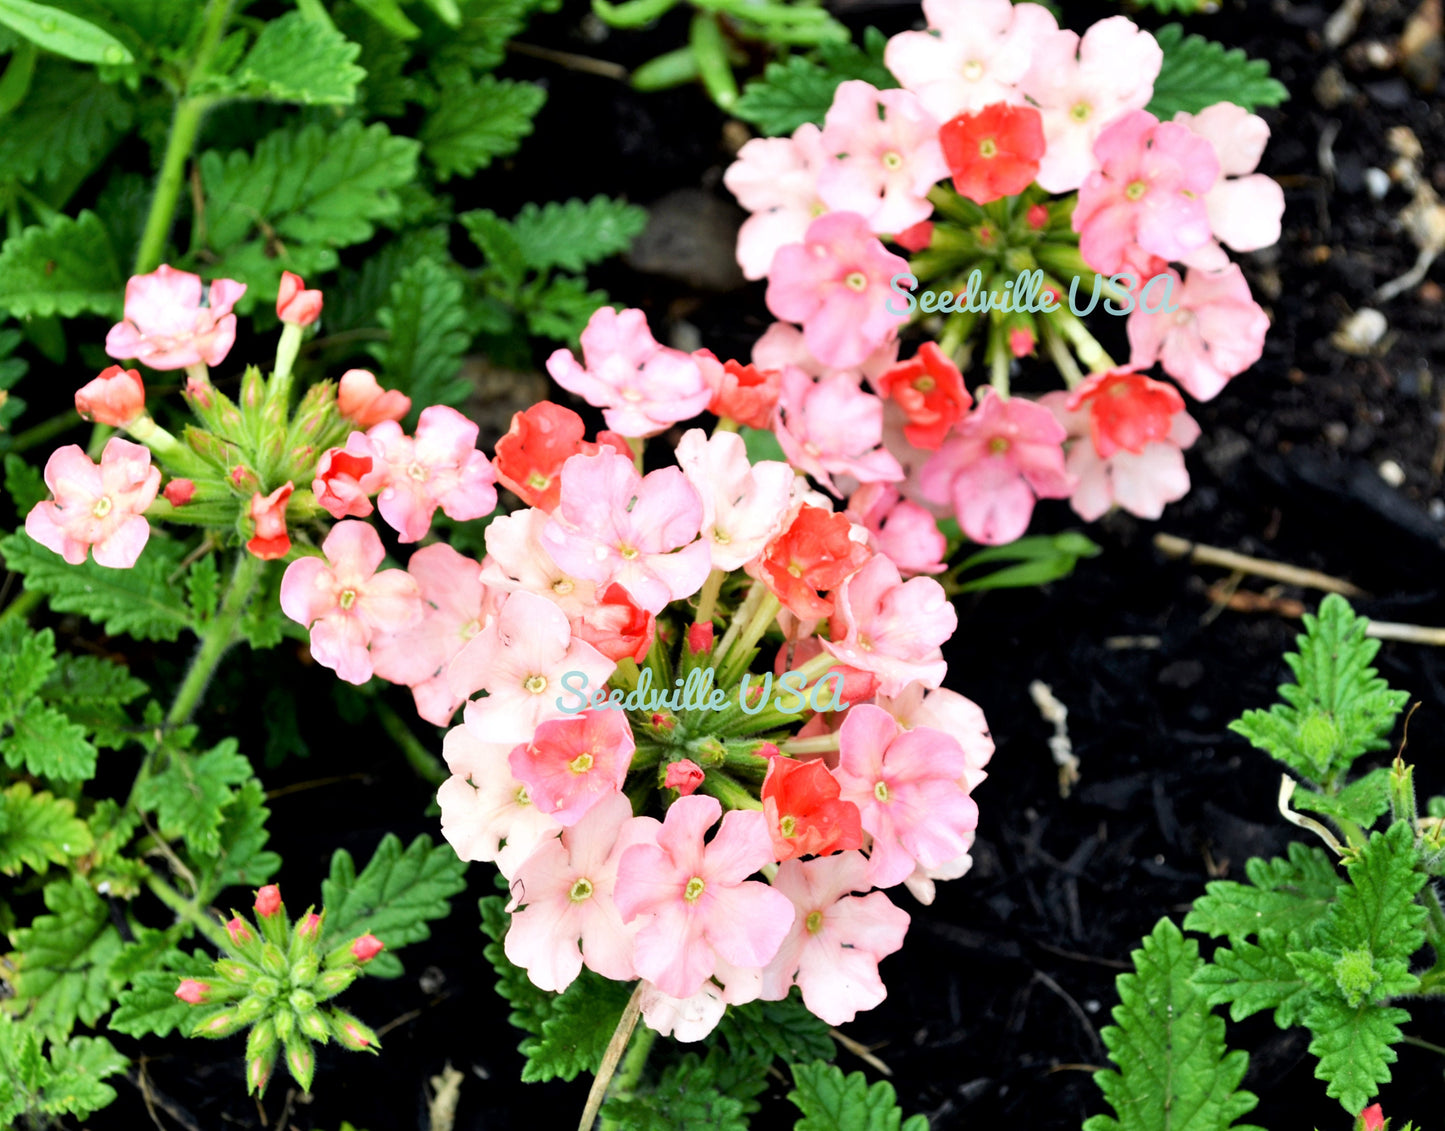 25 ORGANIC Florist PEACH VERBENA Grandiflora Fragrant Groundcover Pink - Apricot Tone Flower Seeds